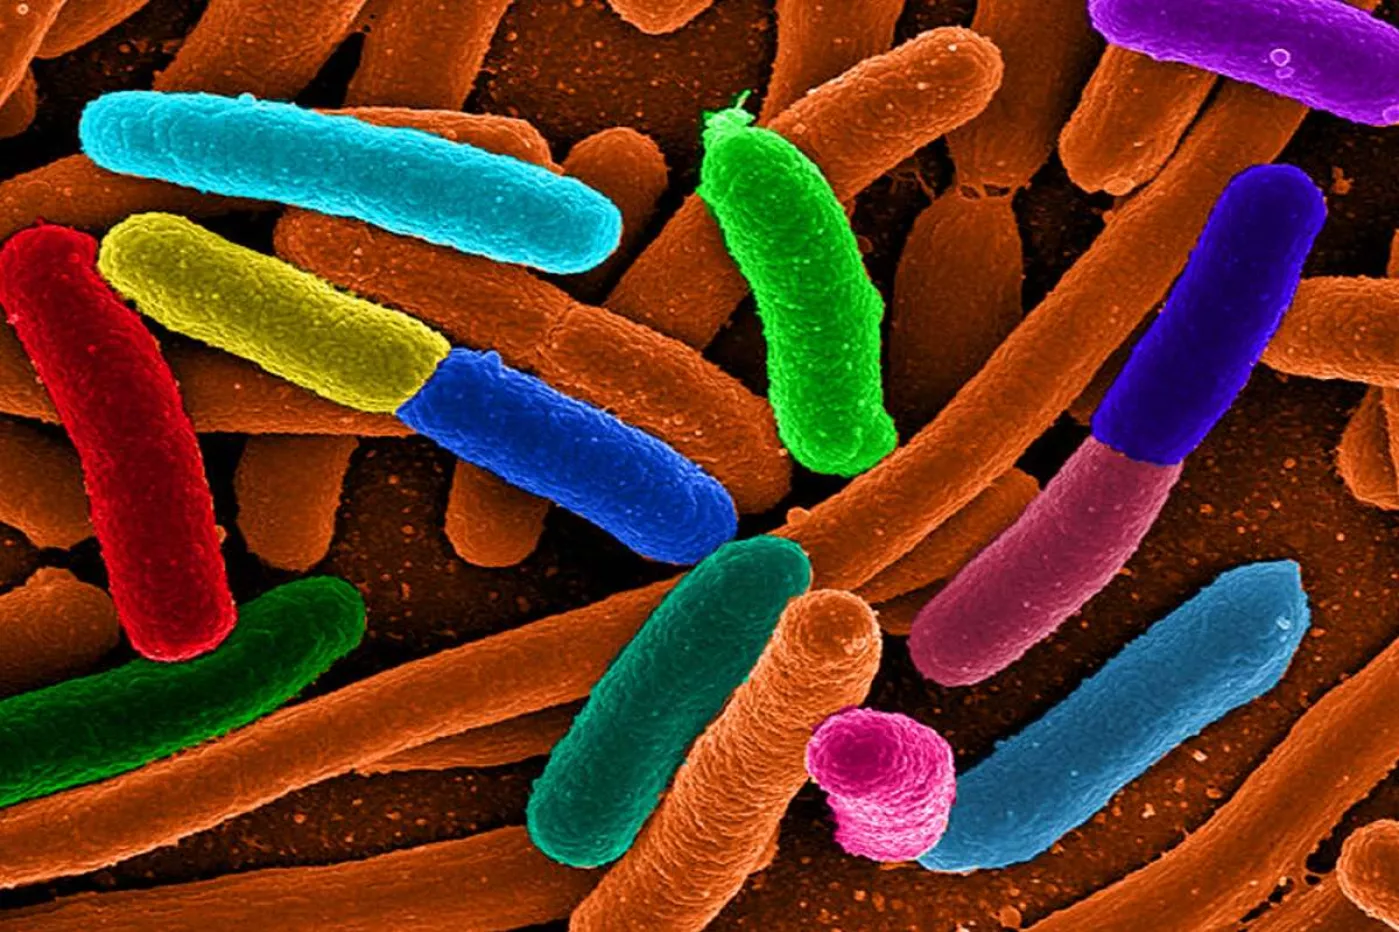 Imagen de microscopía electrónica de barrido de la bacteria 'Escherichia coli'. Foto: MATTOSAURUS